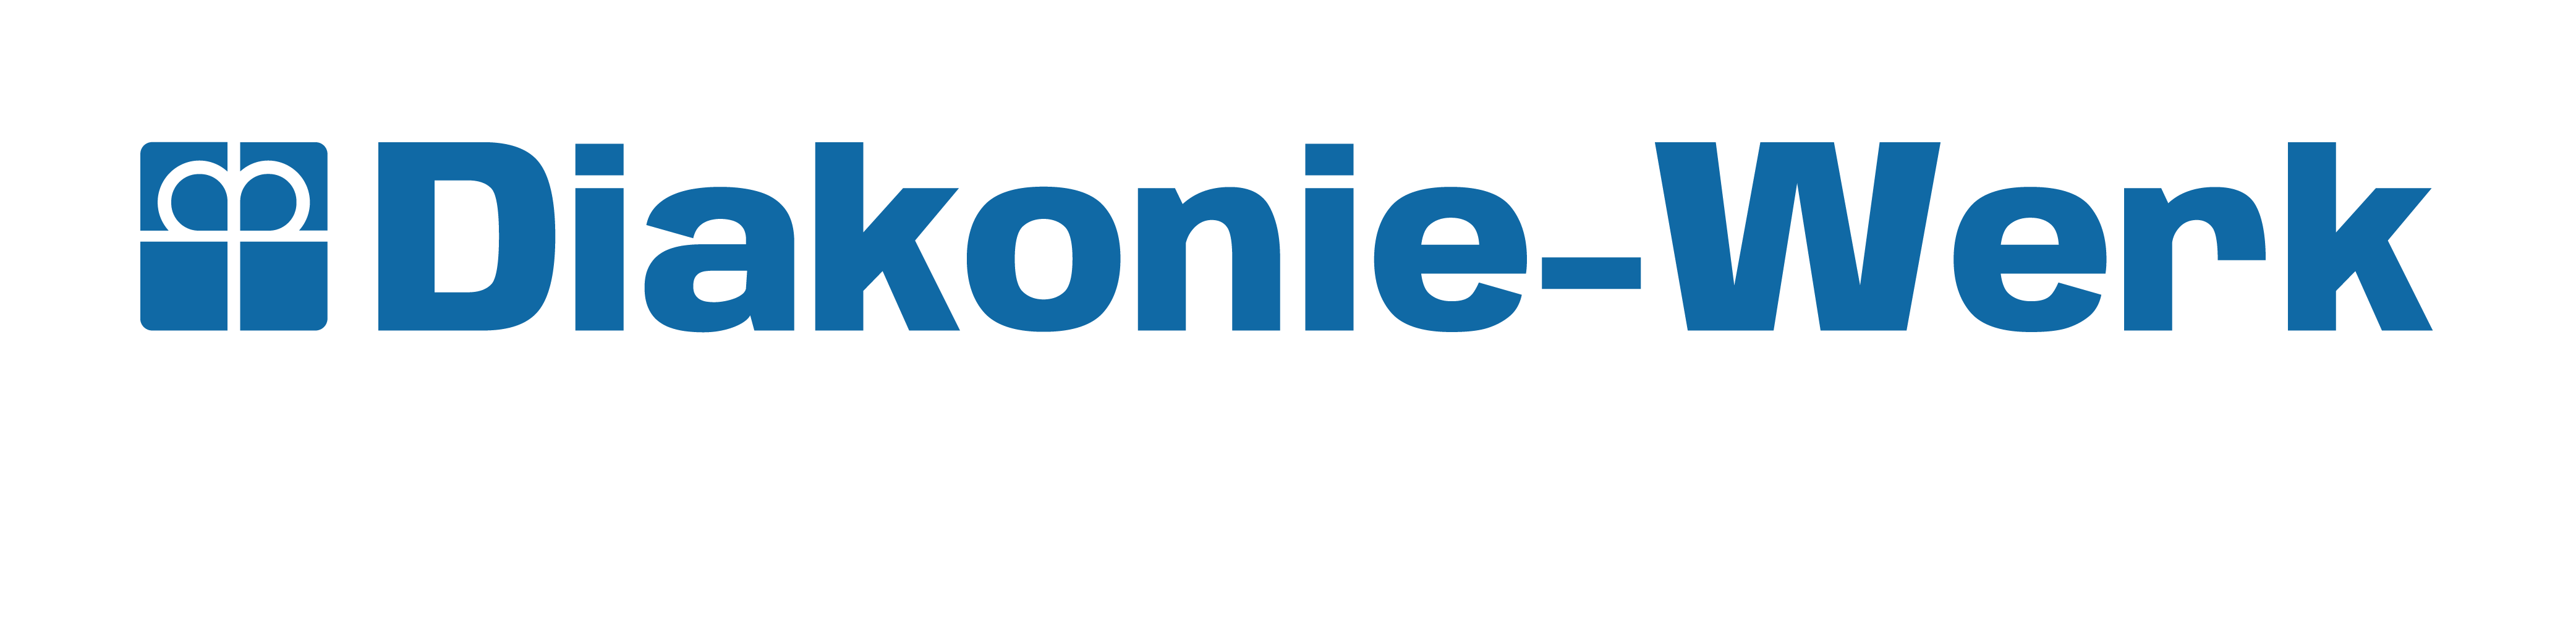 Diakonie-Werk Landkreis Nordhausen-West e.V.